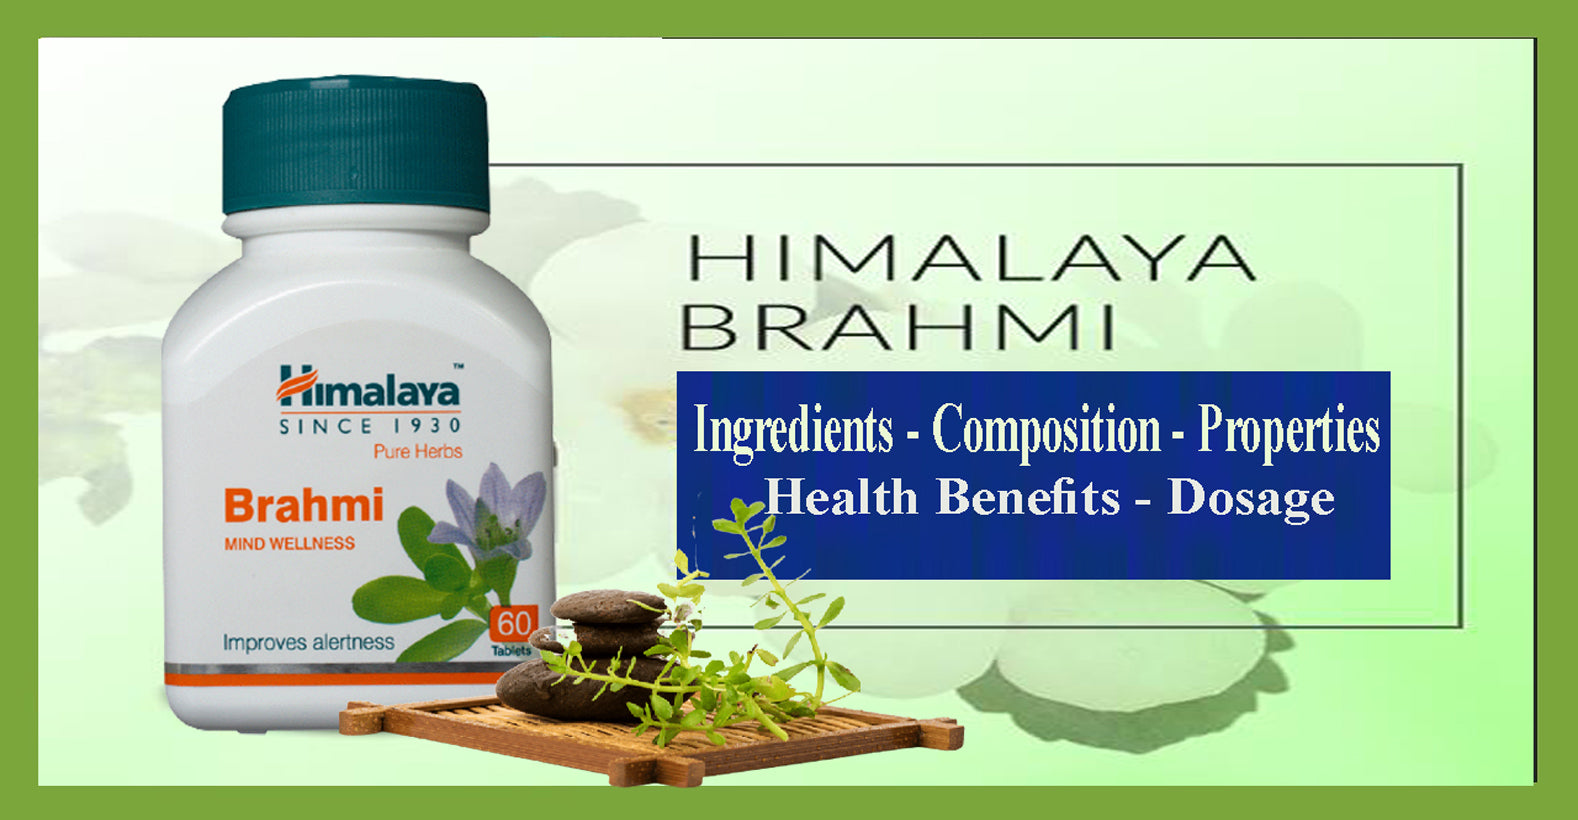 Himalaya Pure Herbs Brahmi Mind Wellness - Ingredients, Composition, Properties, Health Benefits, Dosage